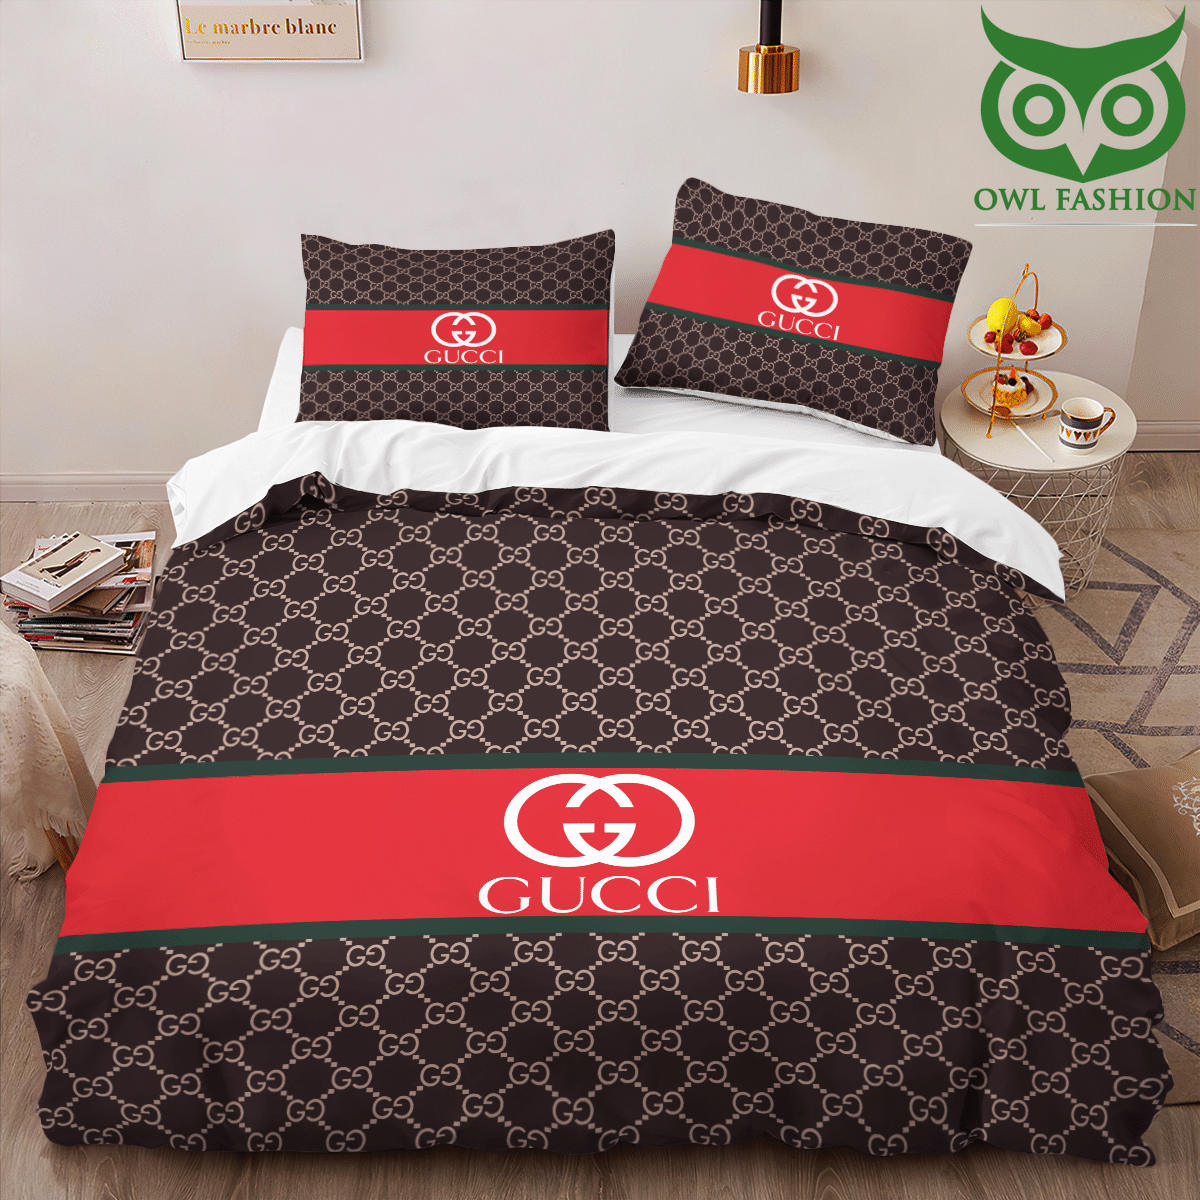 Red Gucci basic logo bedding set